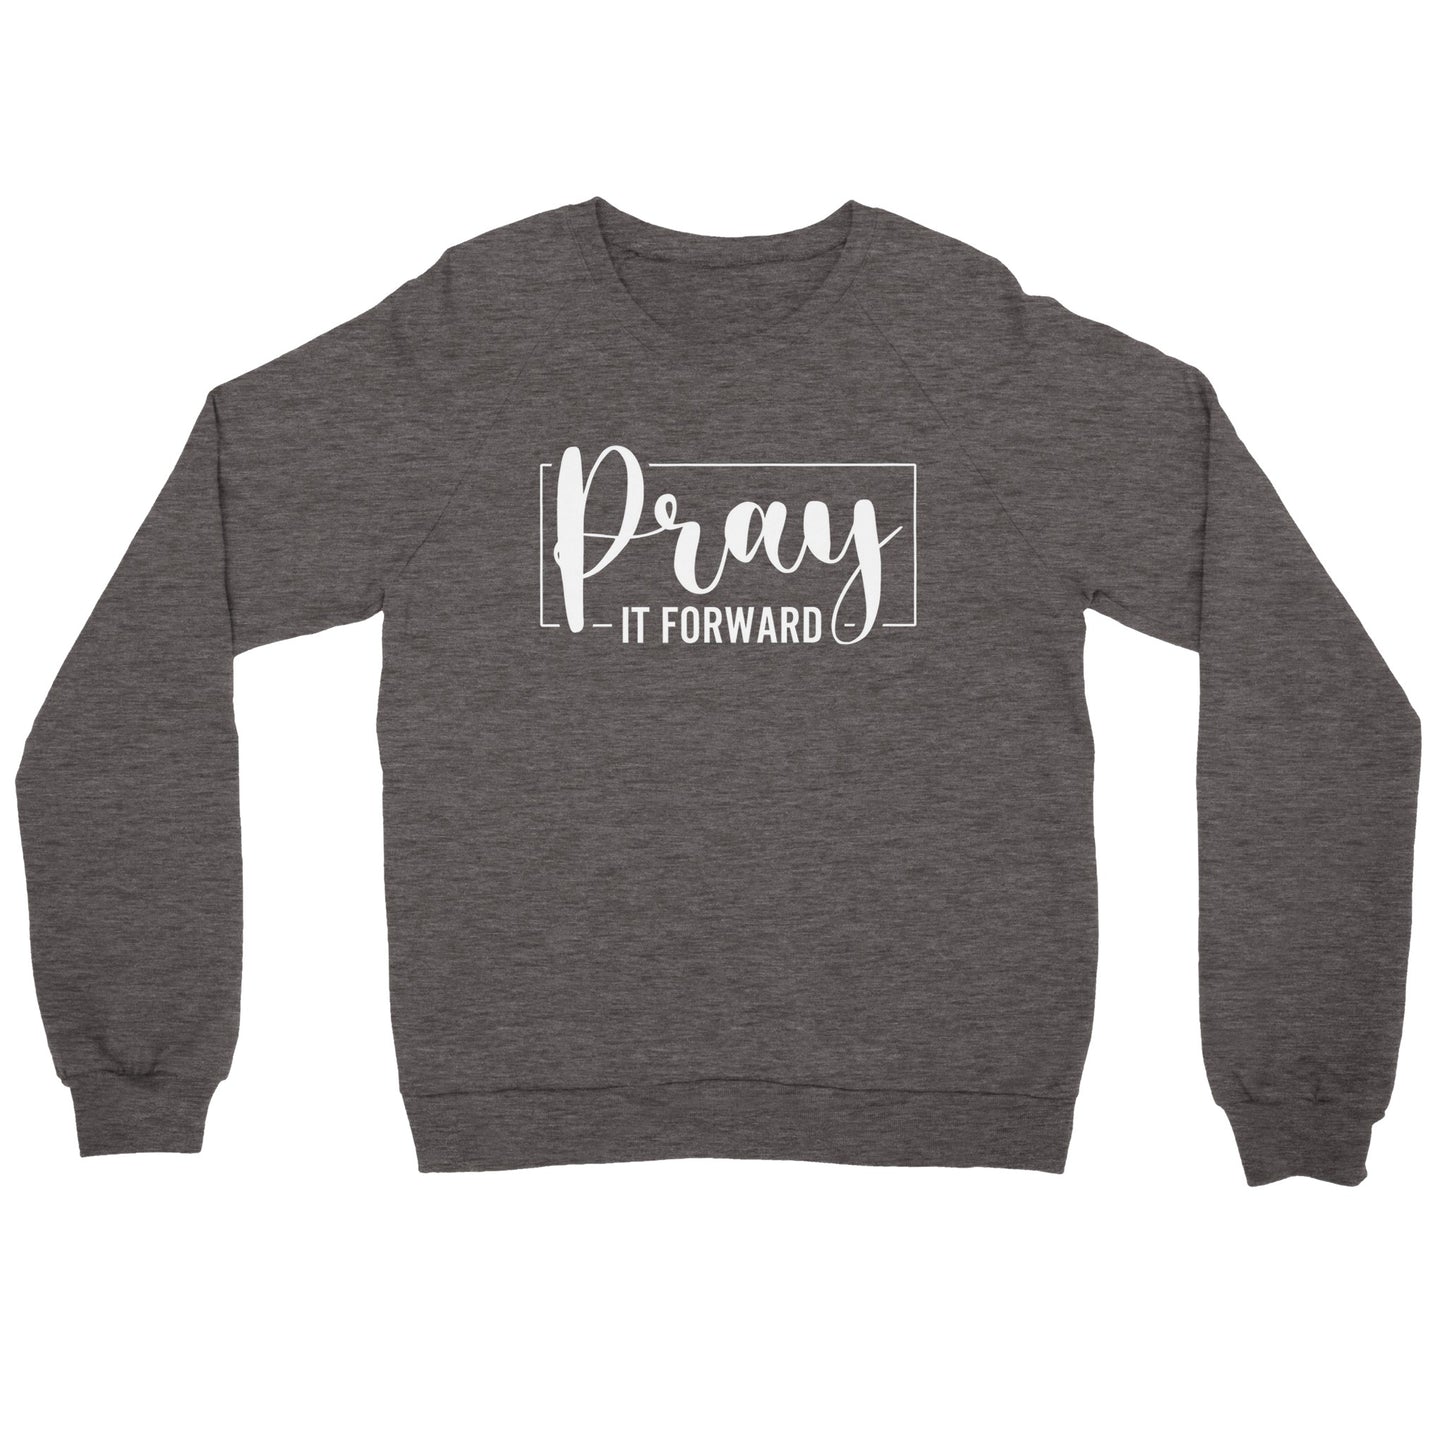 "Pray It Forward" Premium Christian Crewneck Sweatshirt